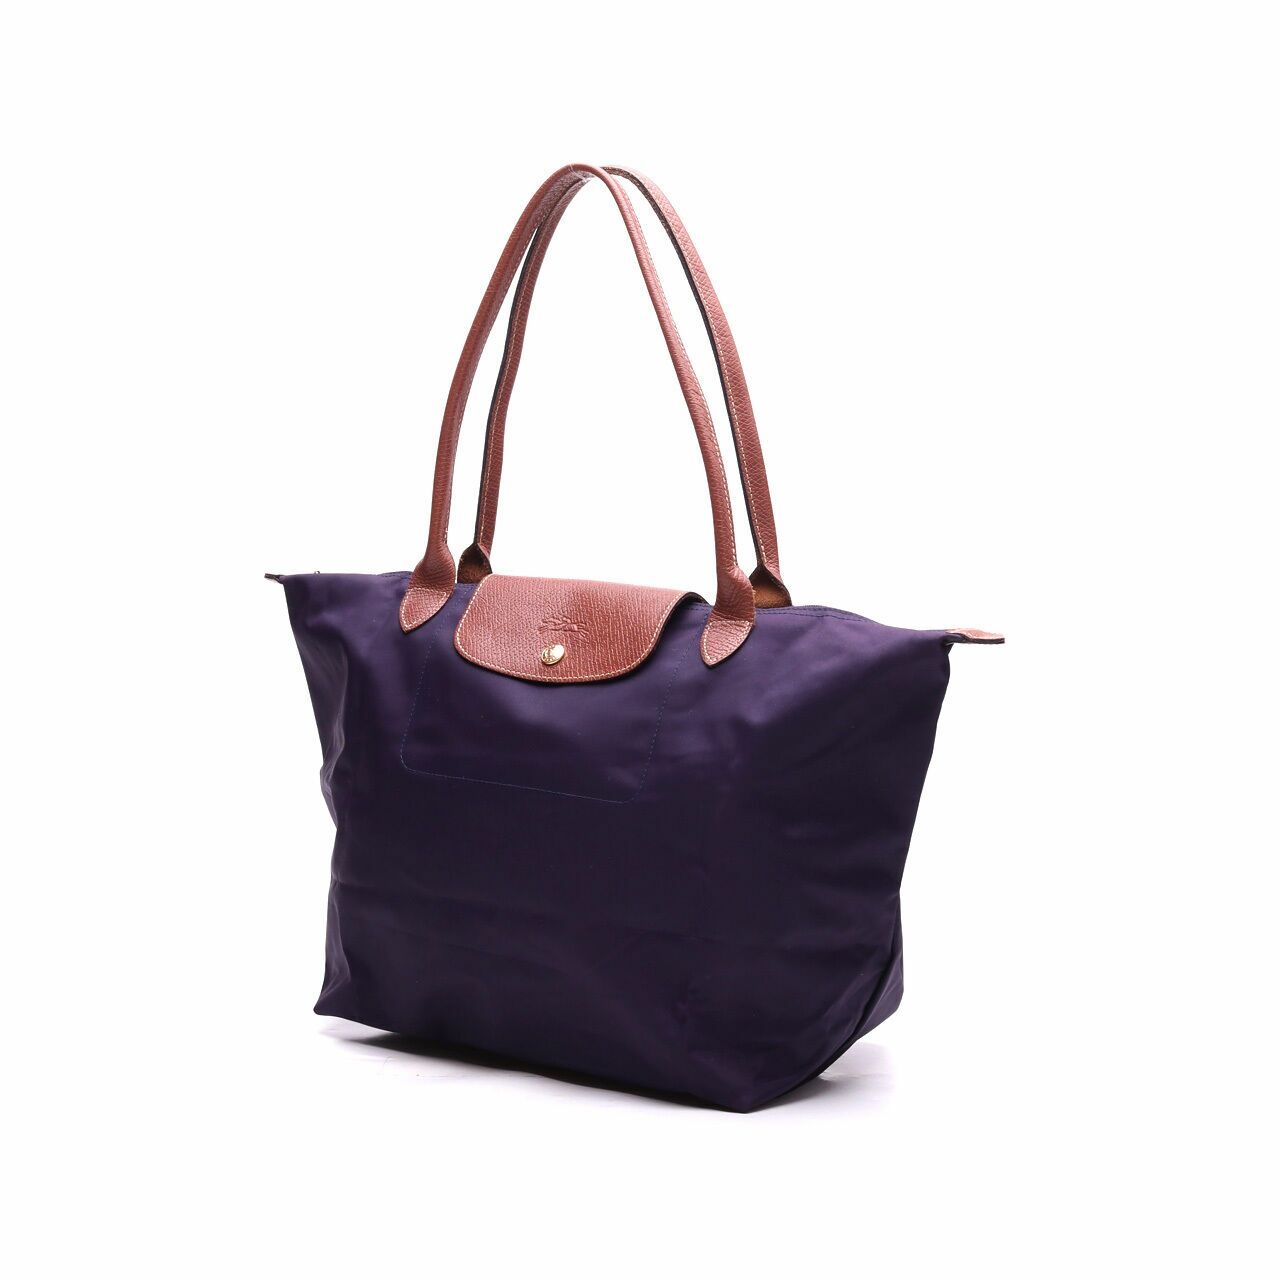 Longchamp Purple Tote Bag